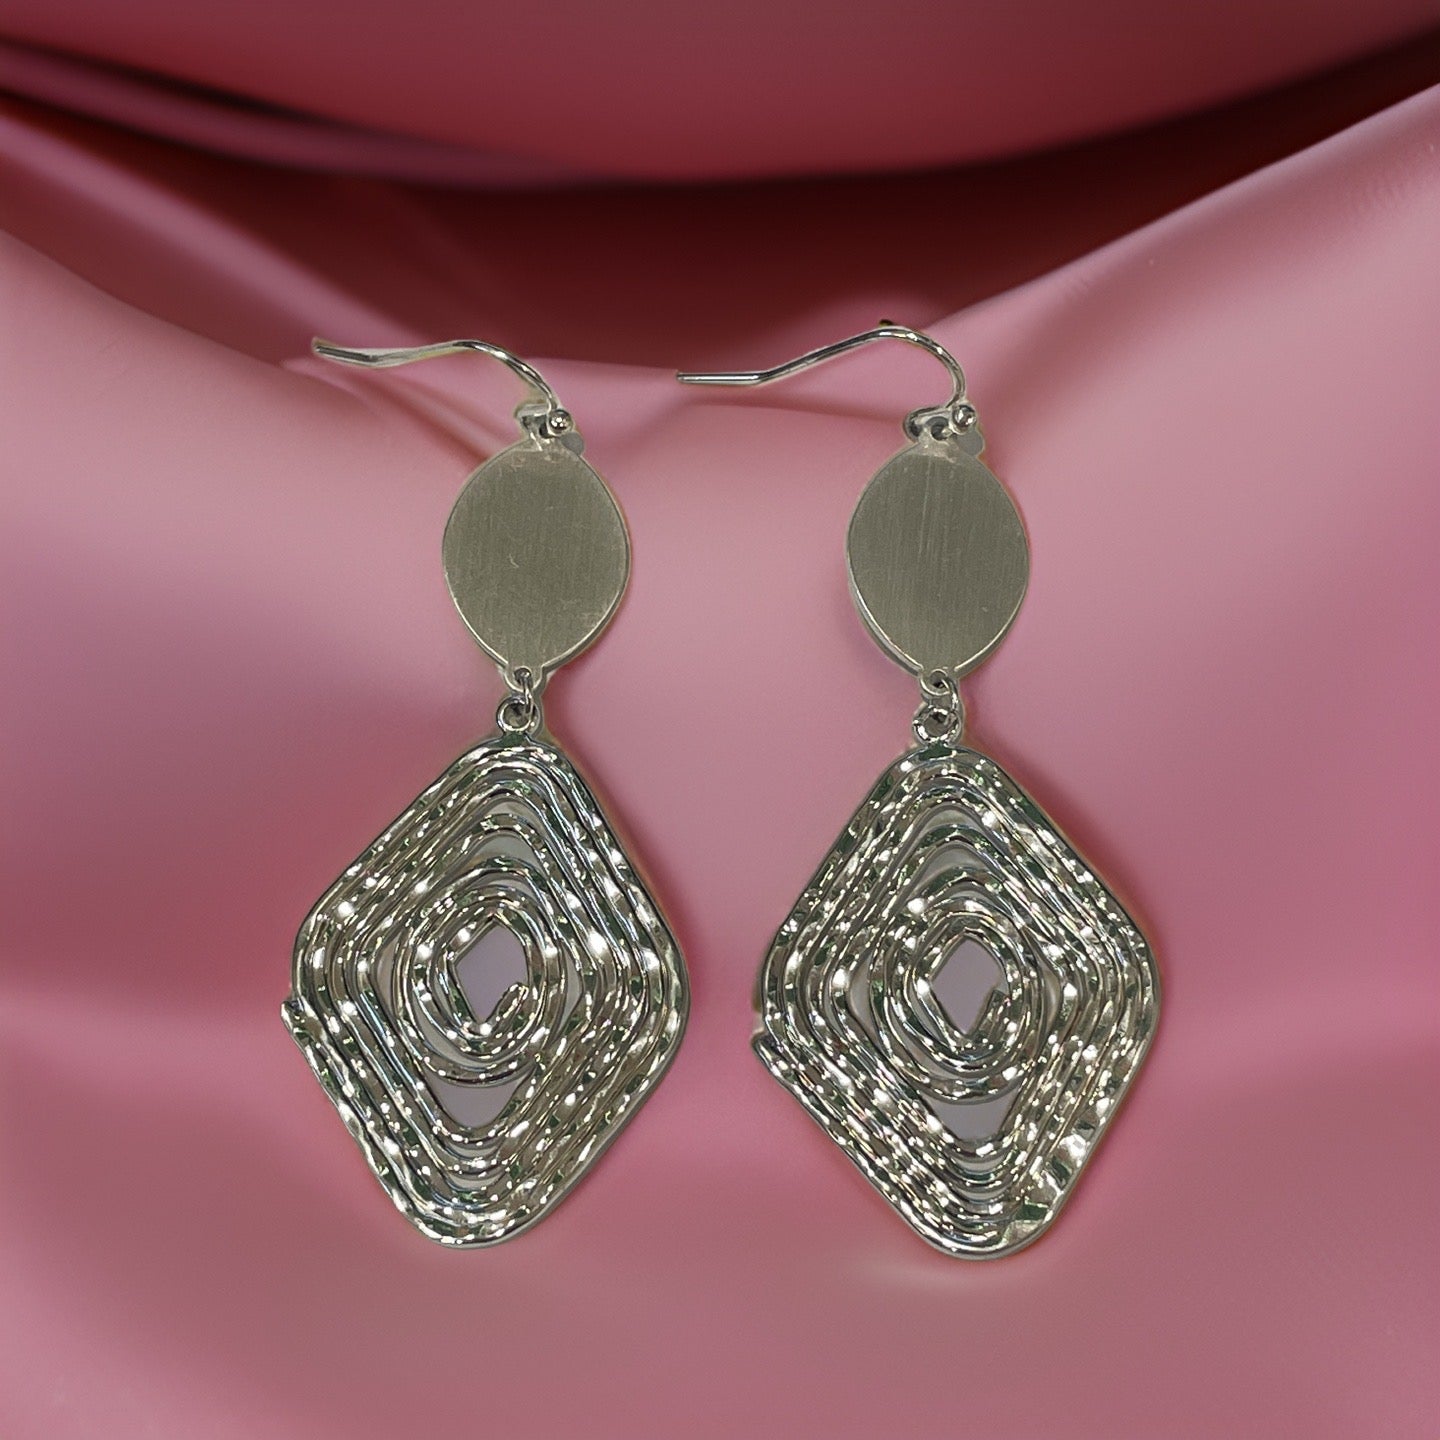 Nesting Teardrop Earrings - Available in Gold & Silver